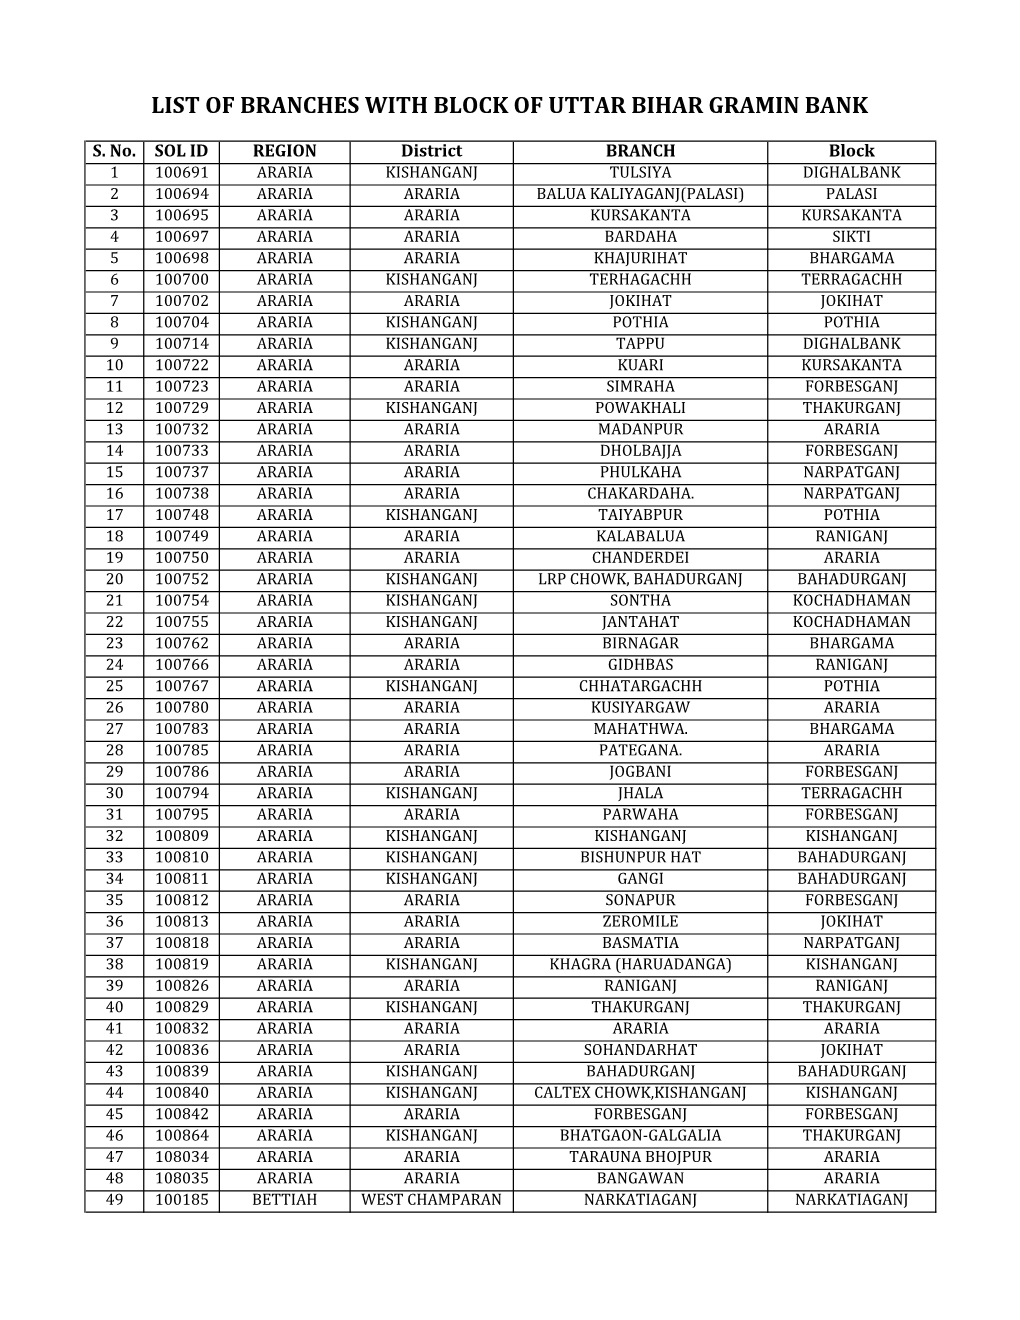 List of Branches with Block of Uttar Bihar Gramin Bank